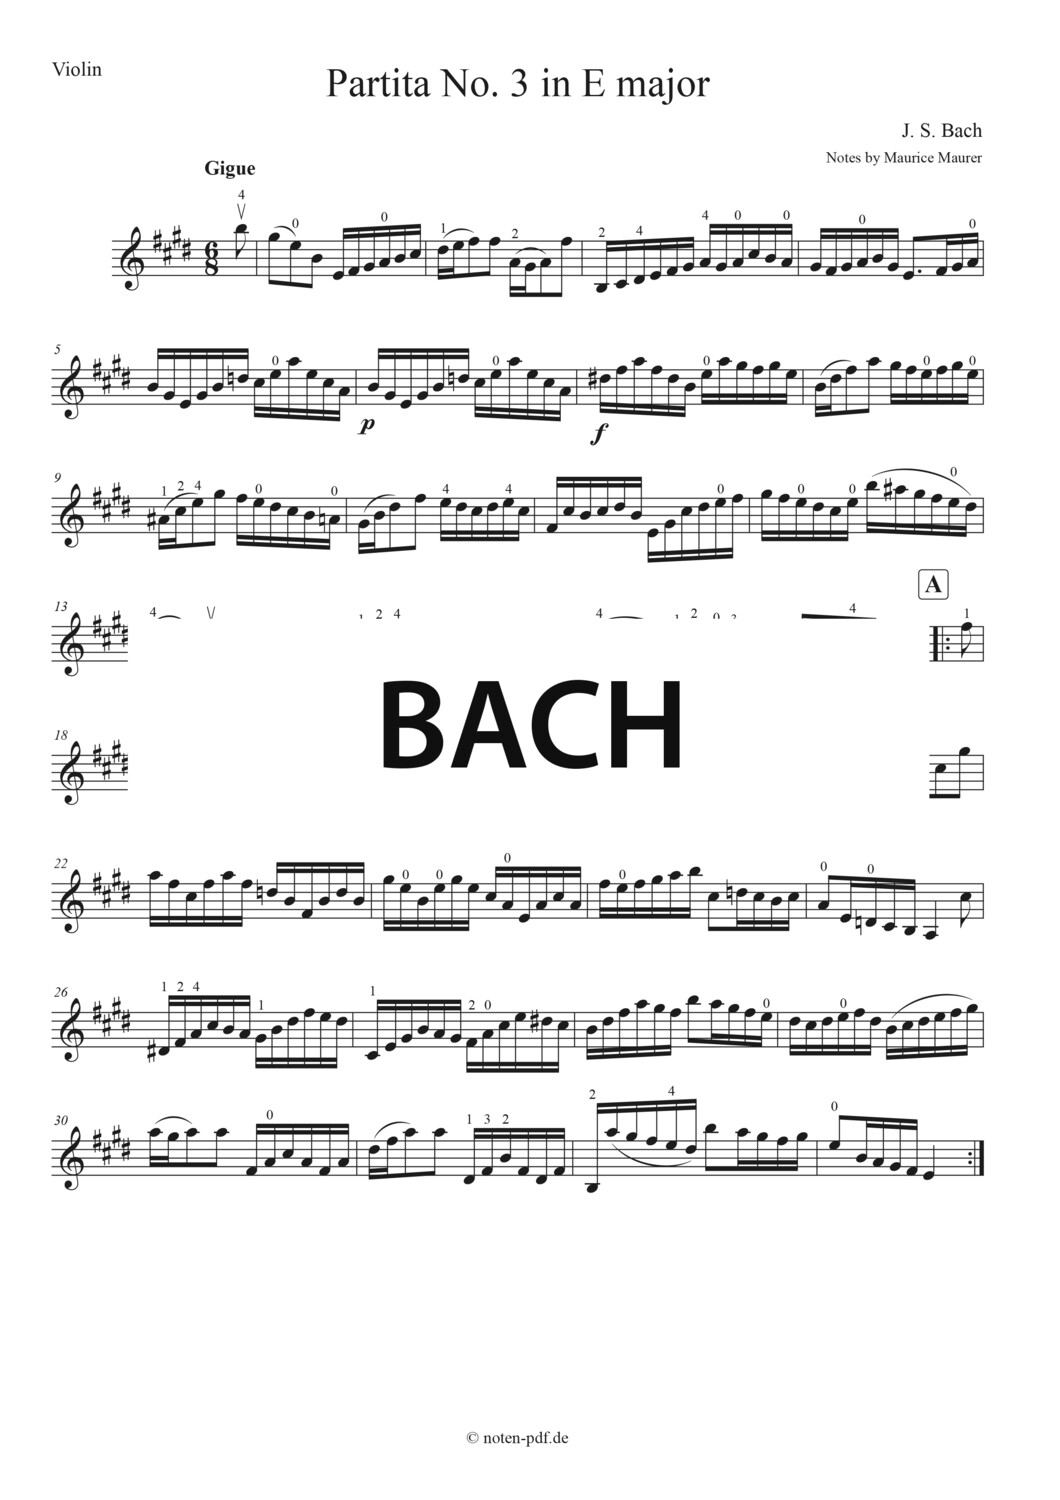 Bach: Partita No. 3 - 7. Mov. "Gigue"